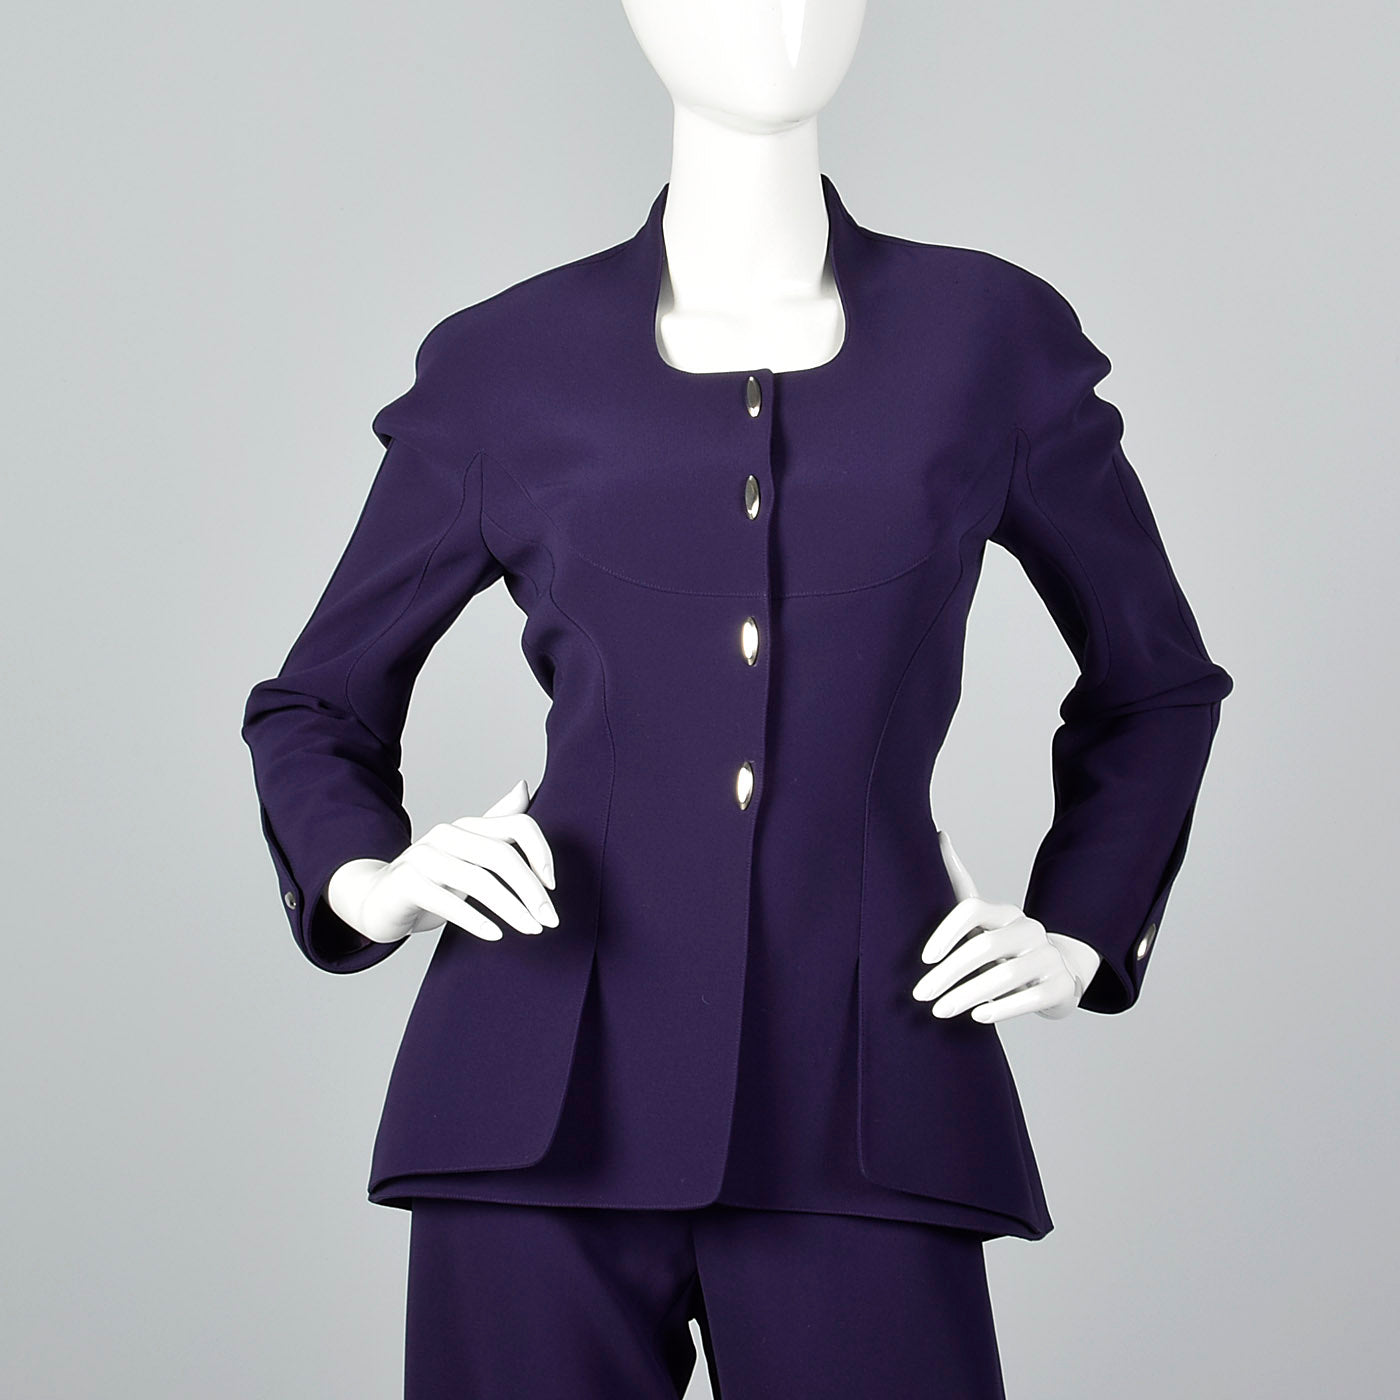 1980s Thierry Mugler Purple Pant Suit